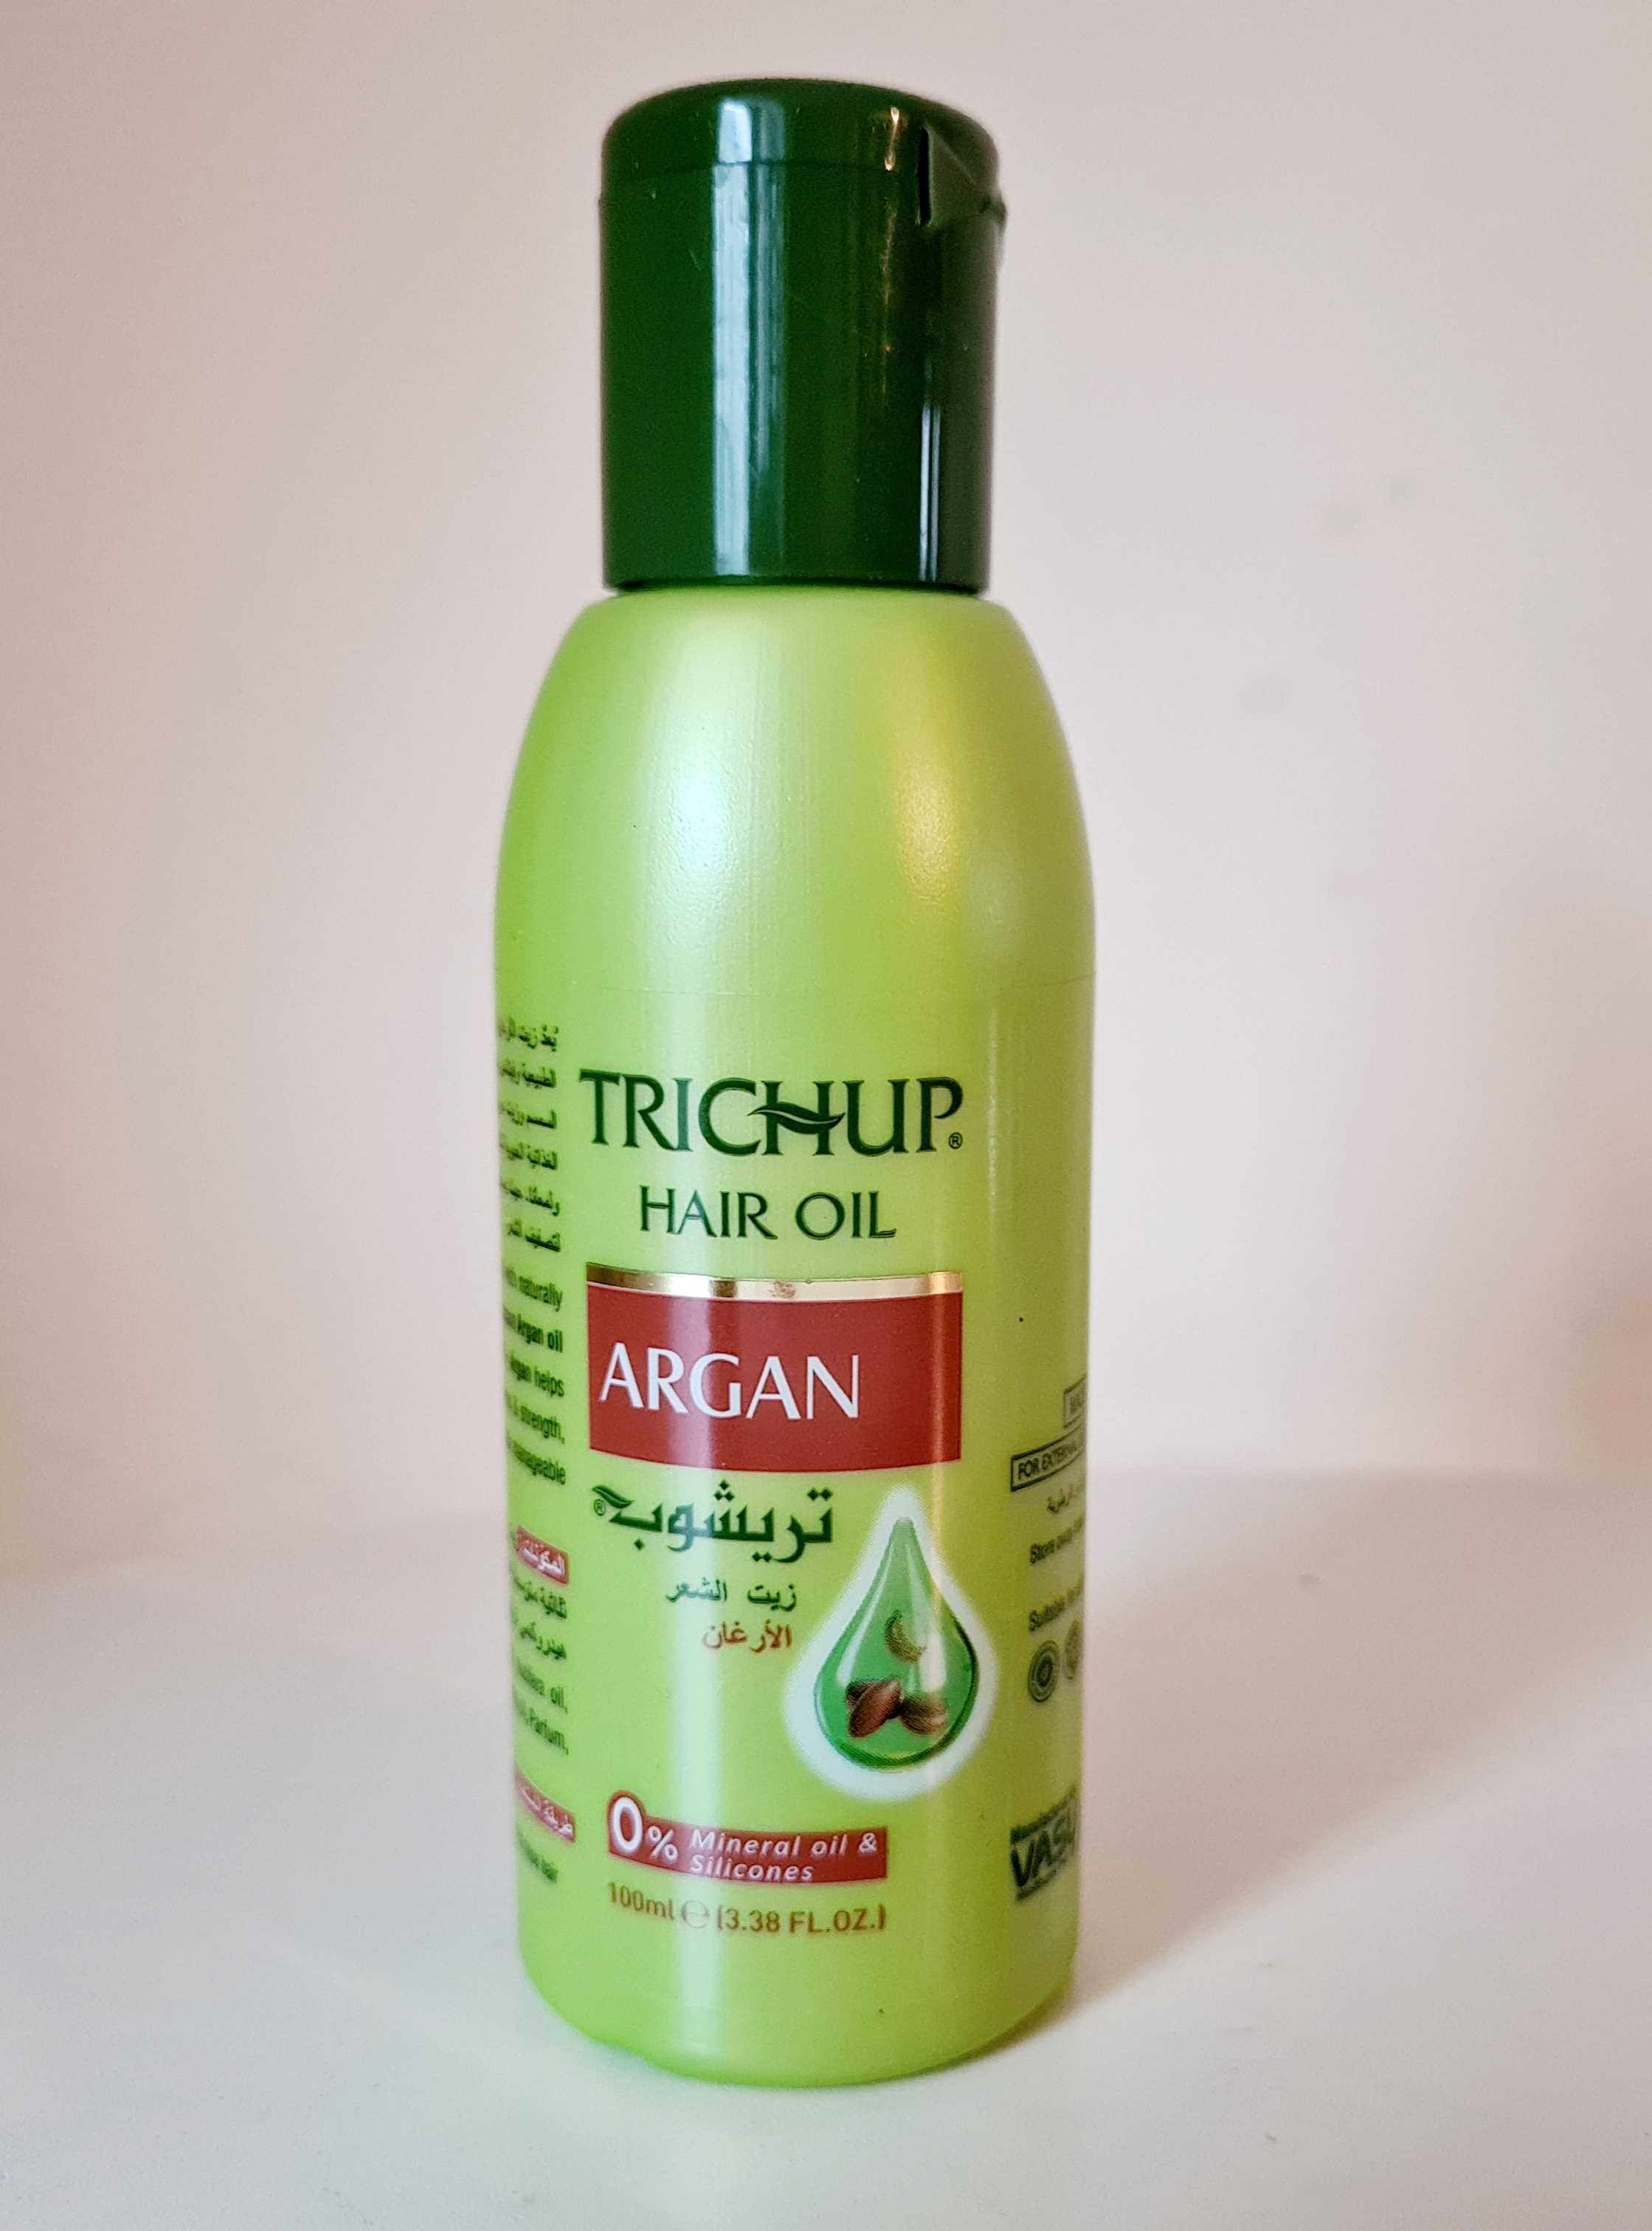 TRICHUP Hair Oil - arabski olejek arganowy do włosów, rarytas!